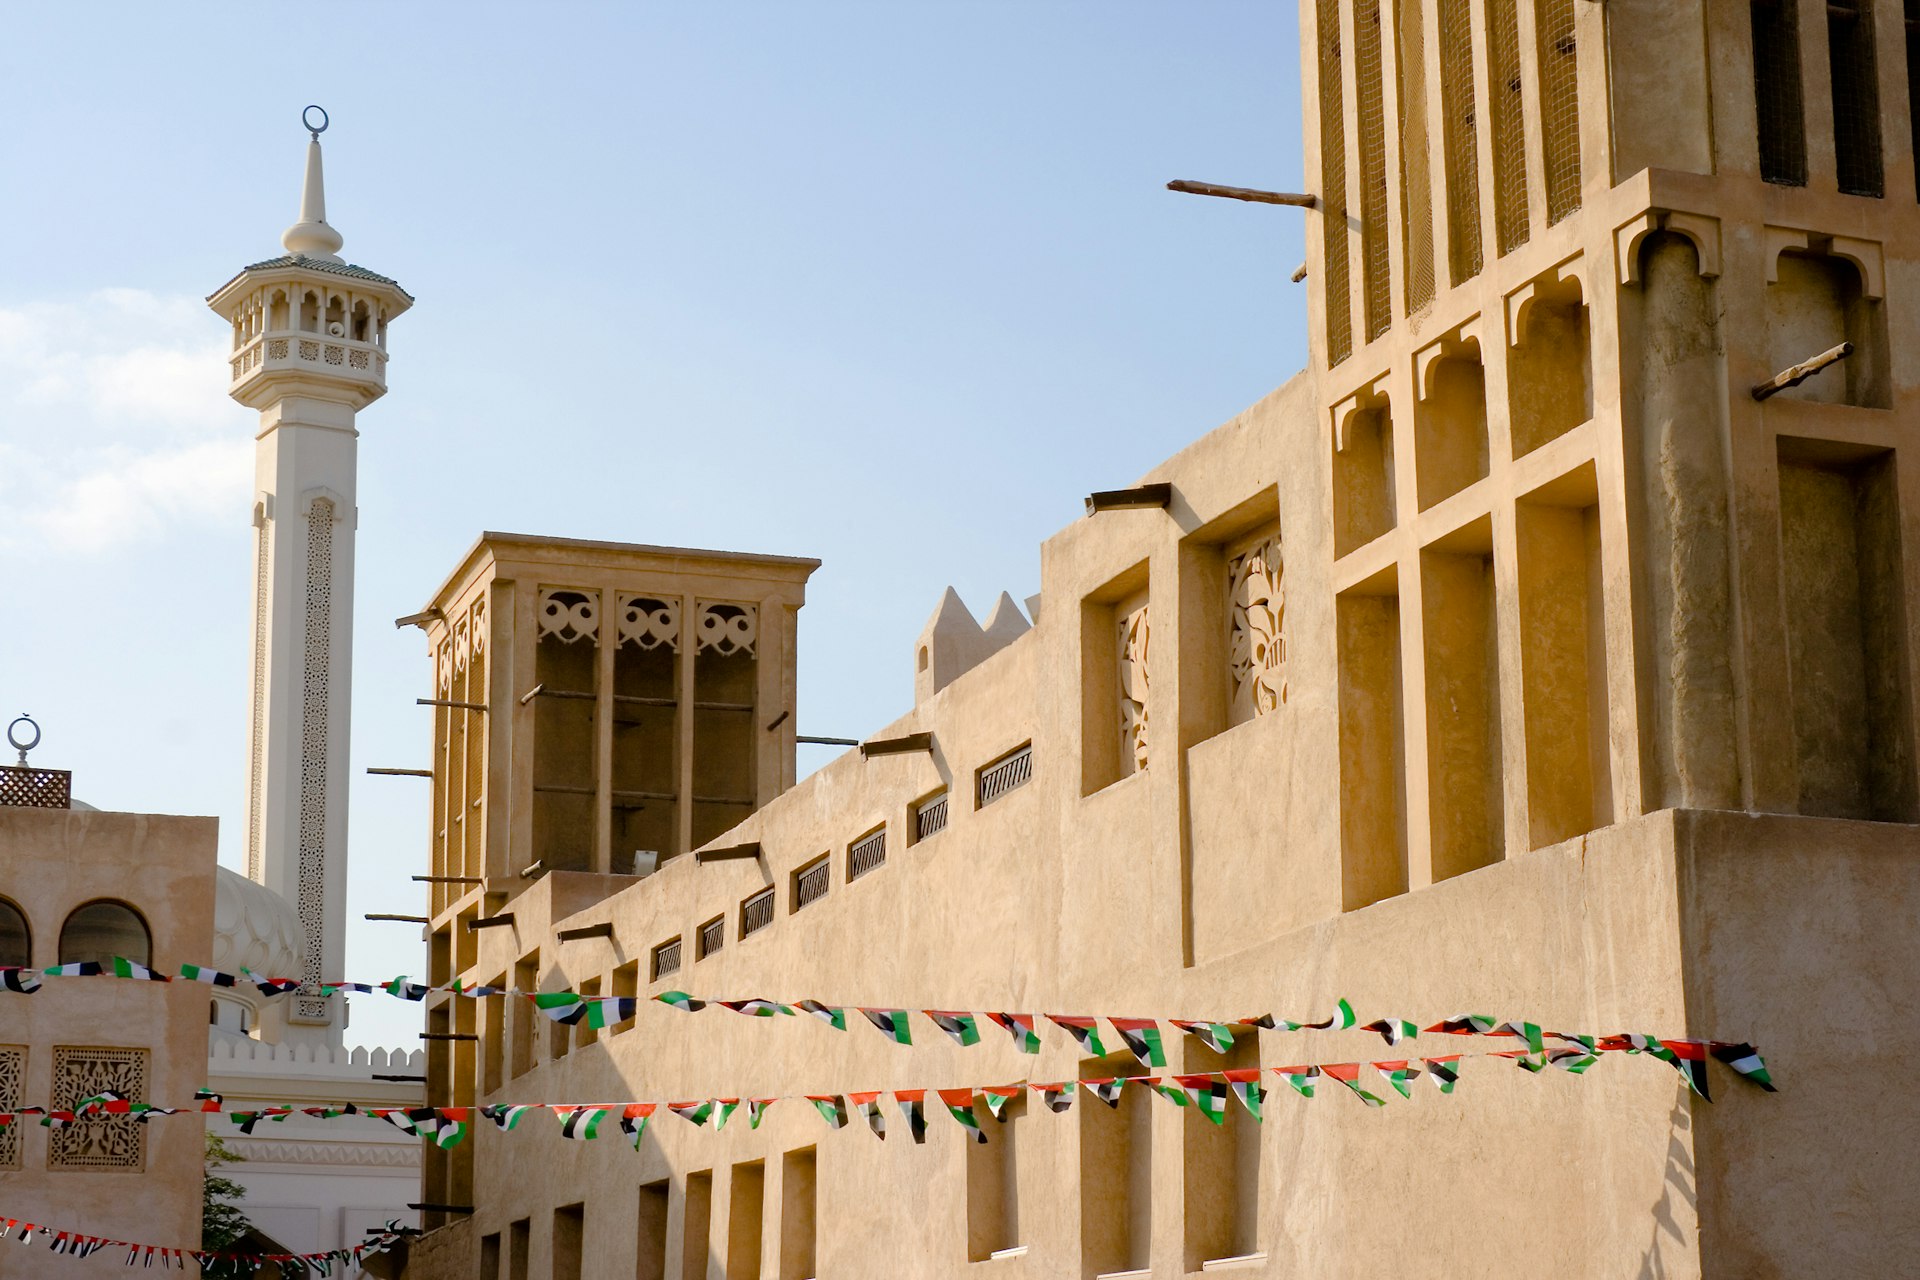 Bastakiya, the old town area of Dubai, with decorative flags on UAE national day. Image by AliquisNJ / Getty